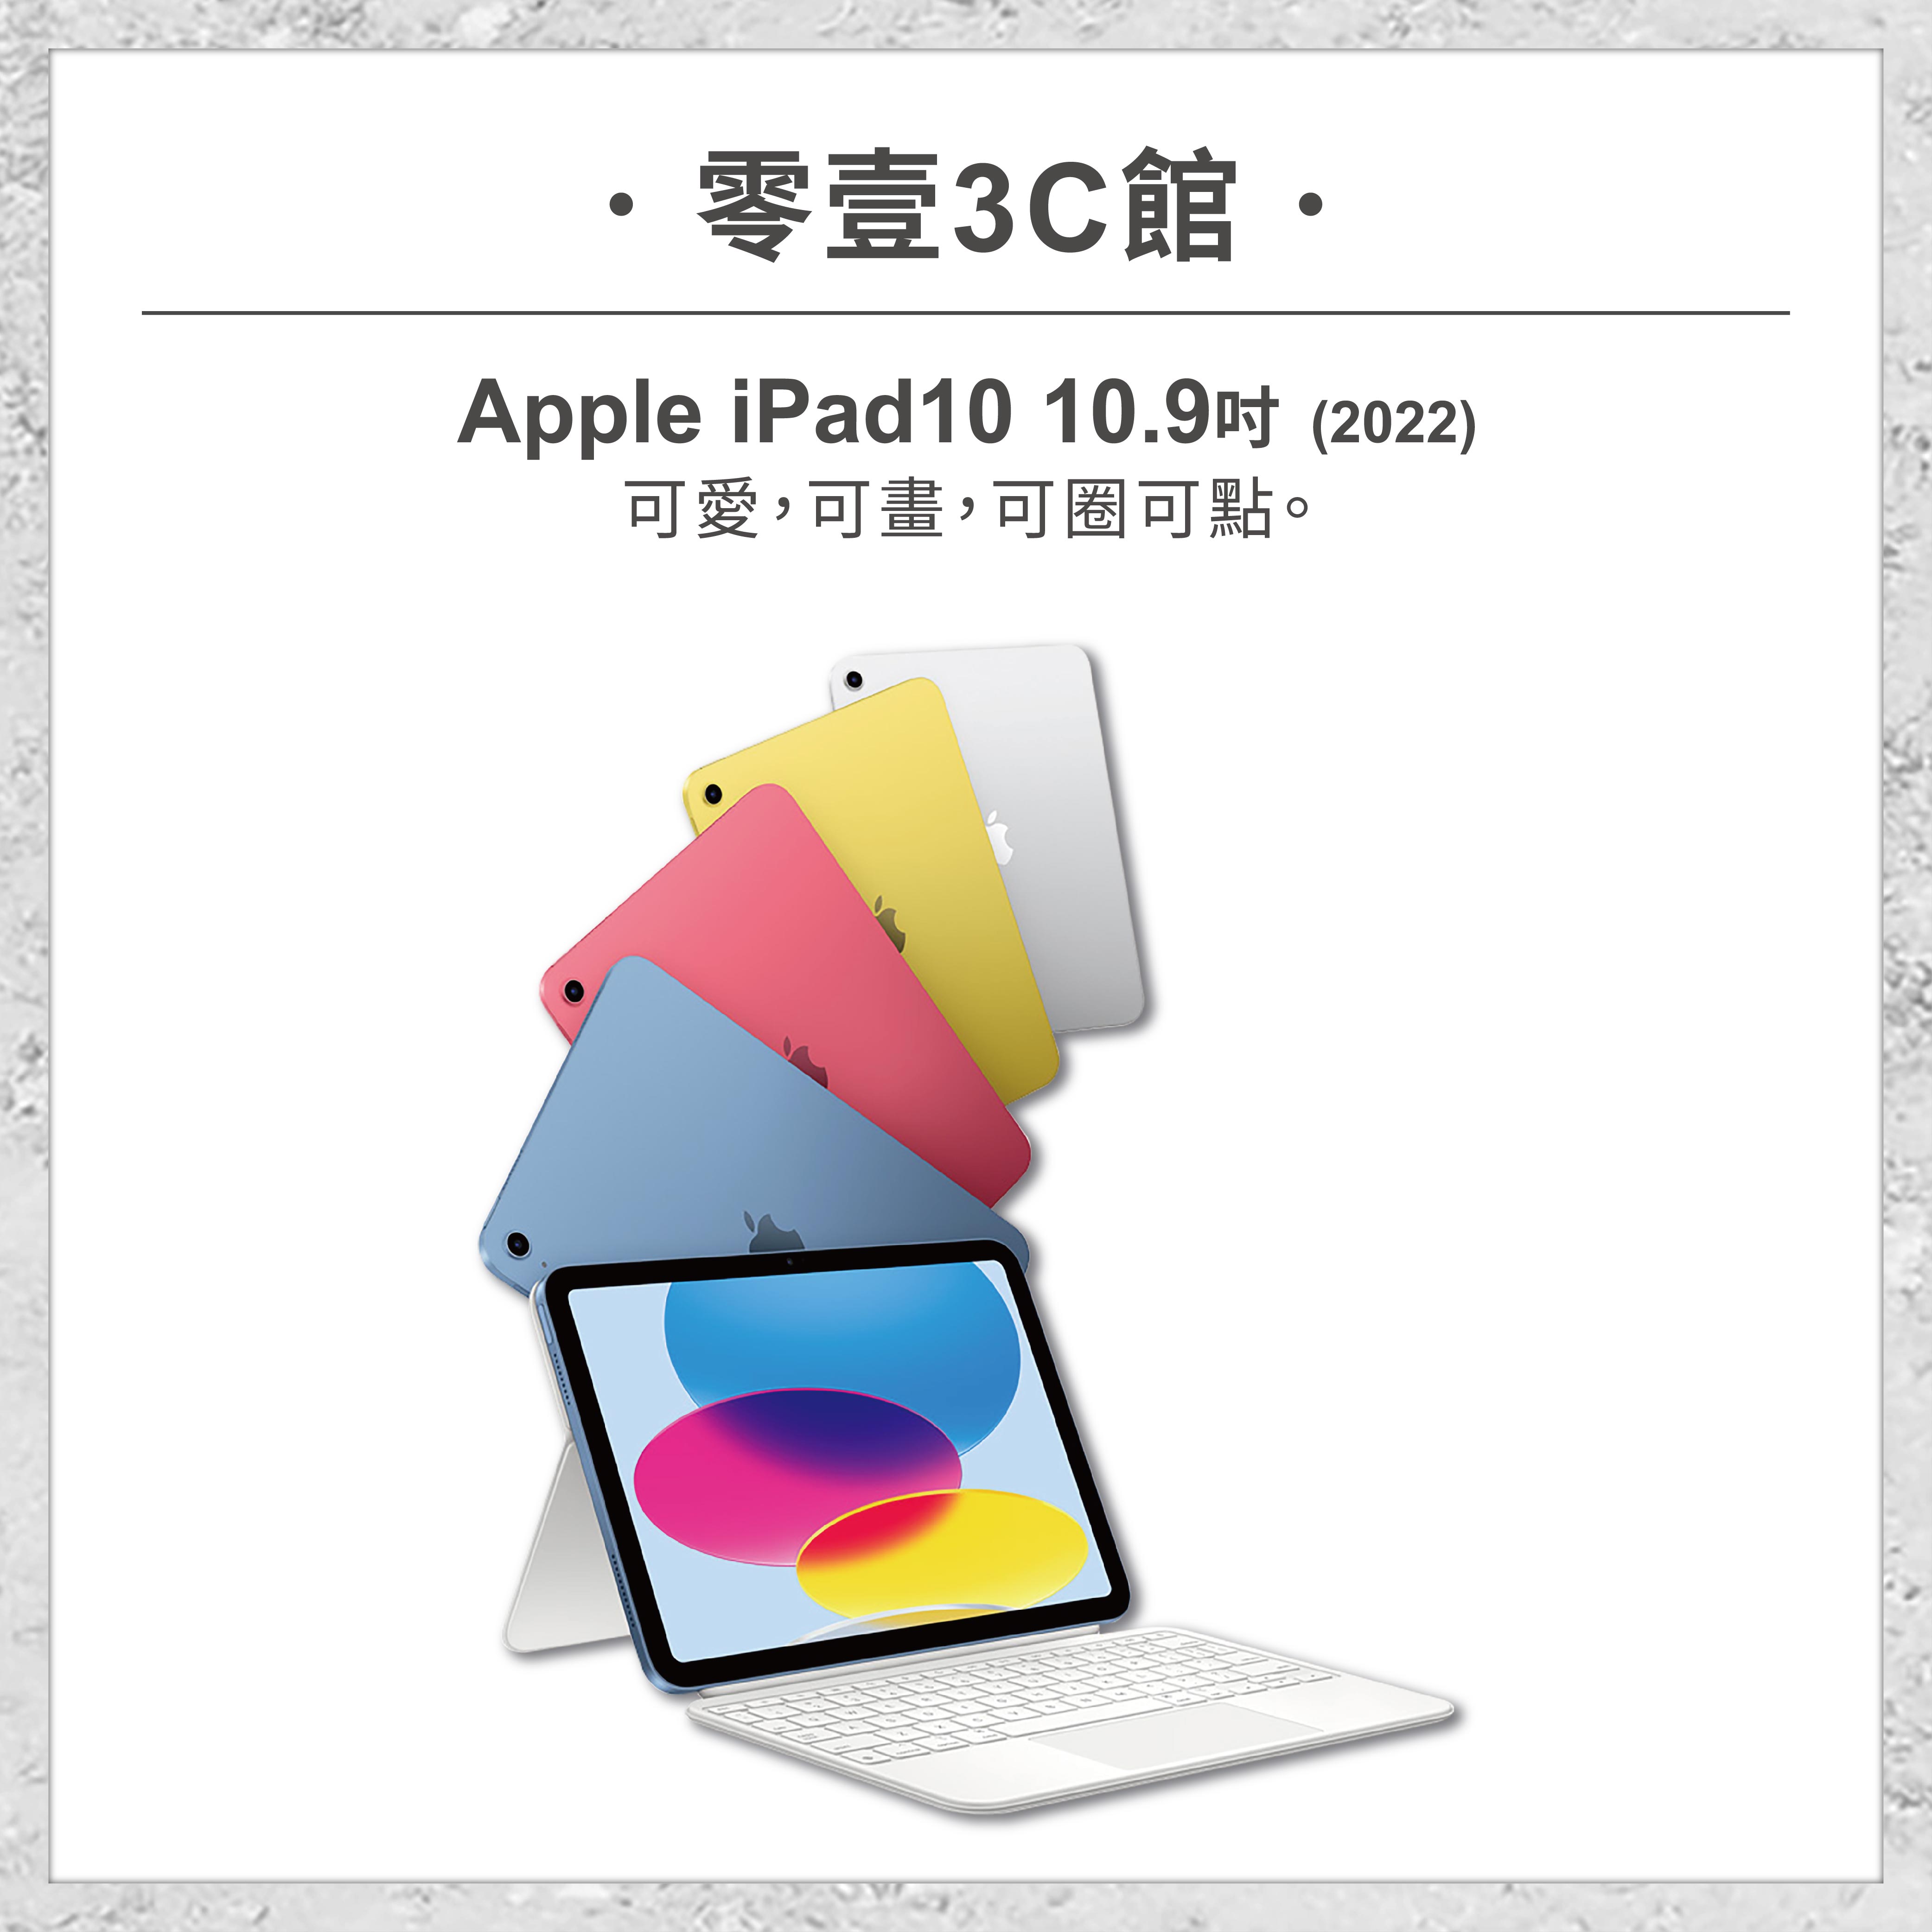 【APPLE】 iPad10 10.9吋(2022) 64GB/256GB 全新平板 平板電腦 原廠保固1年